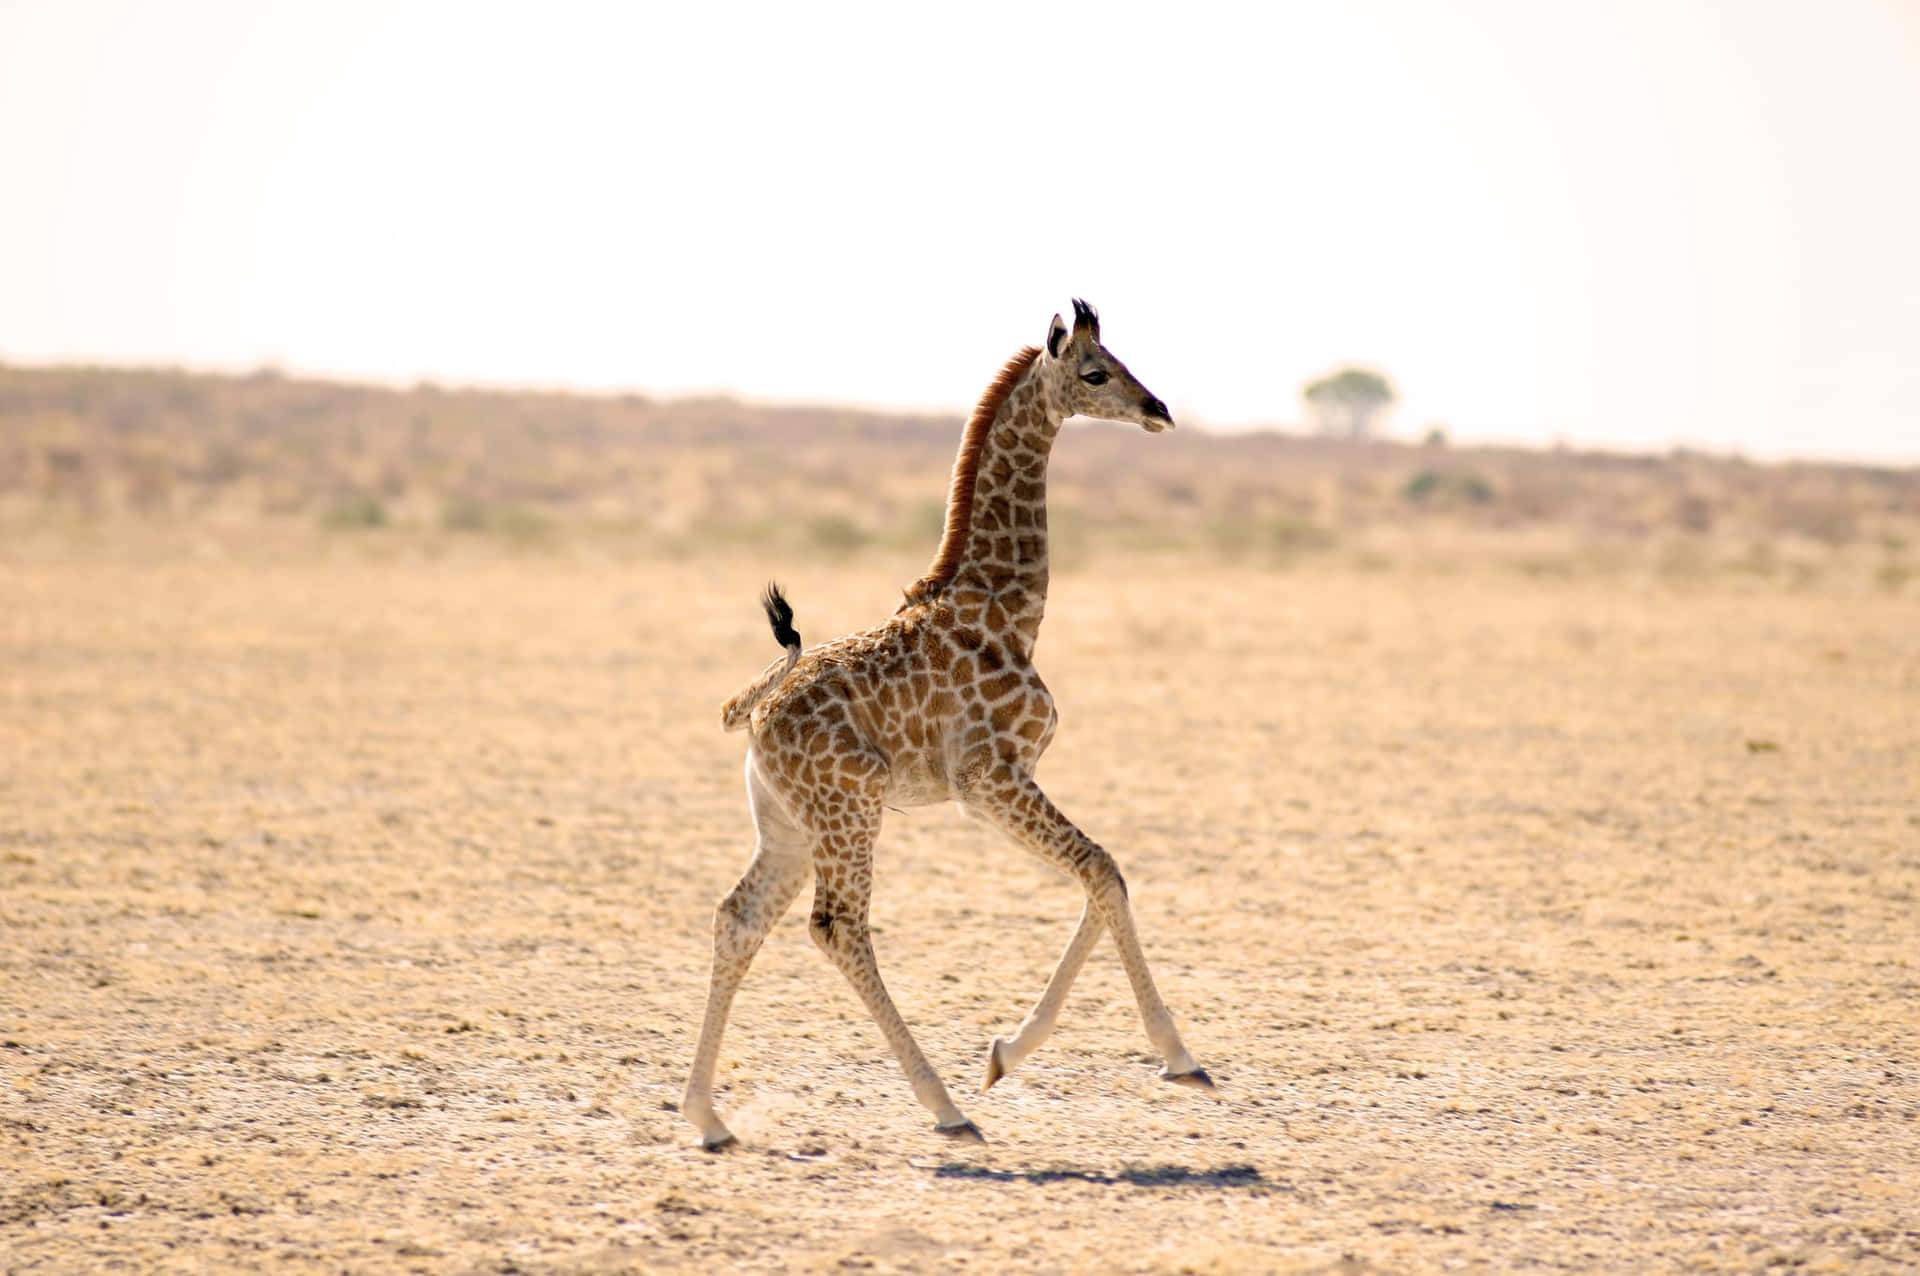 Cute Giraffe Baby Walking Picture